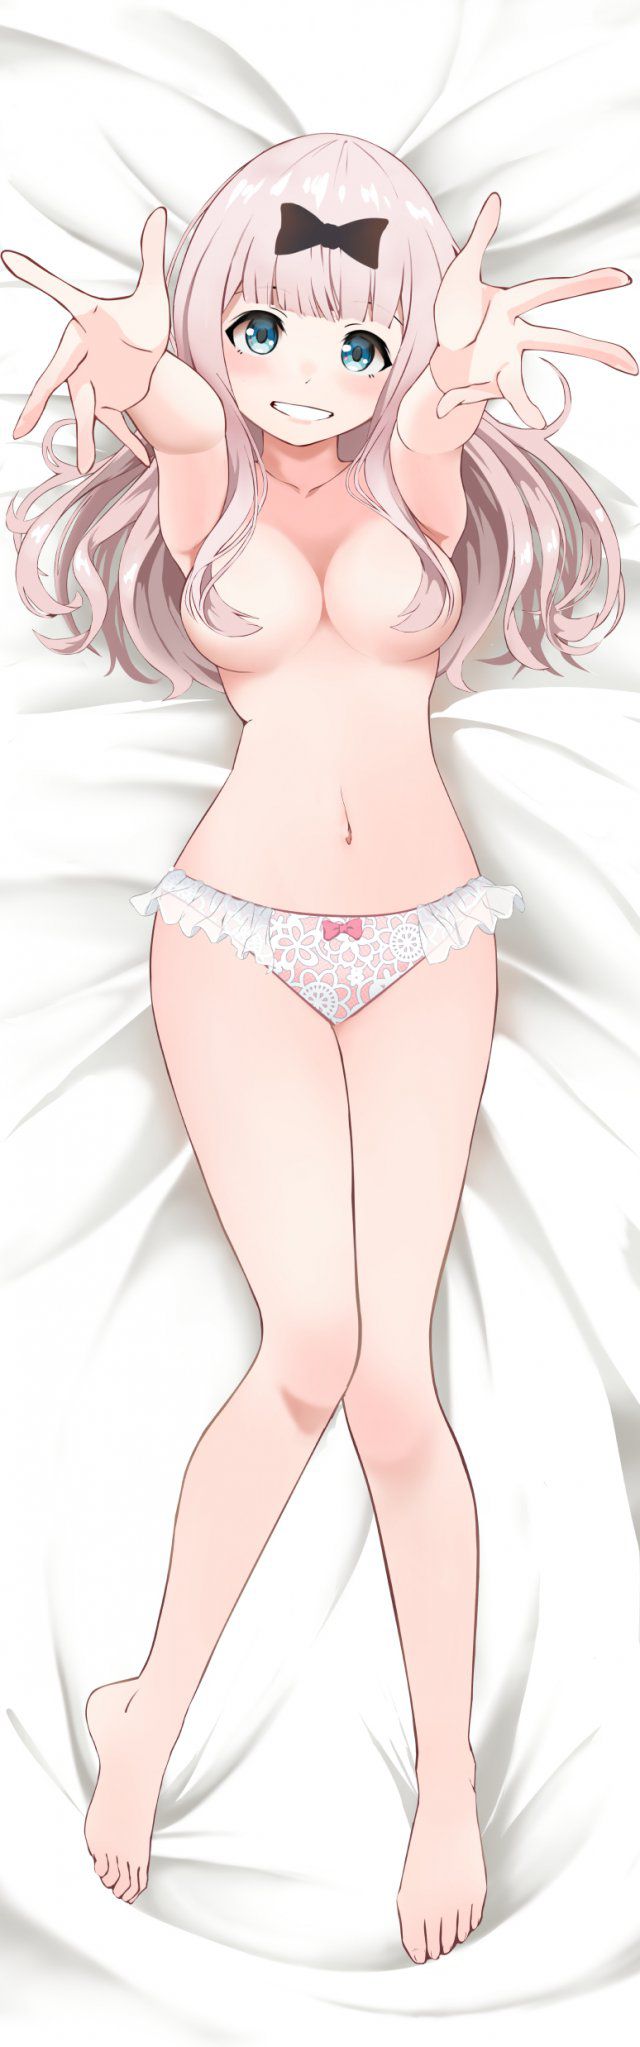 [Secondary] underwear girl image [erotic] Part 3 4